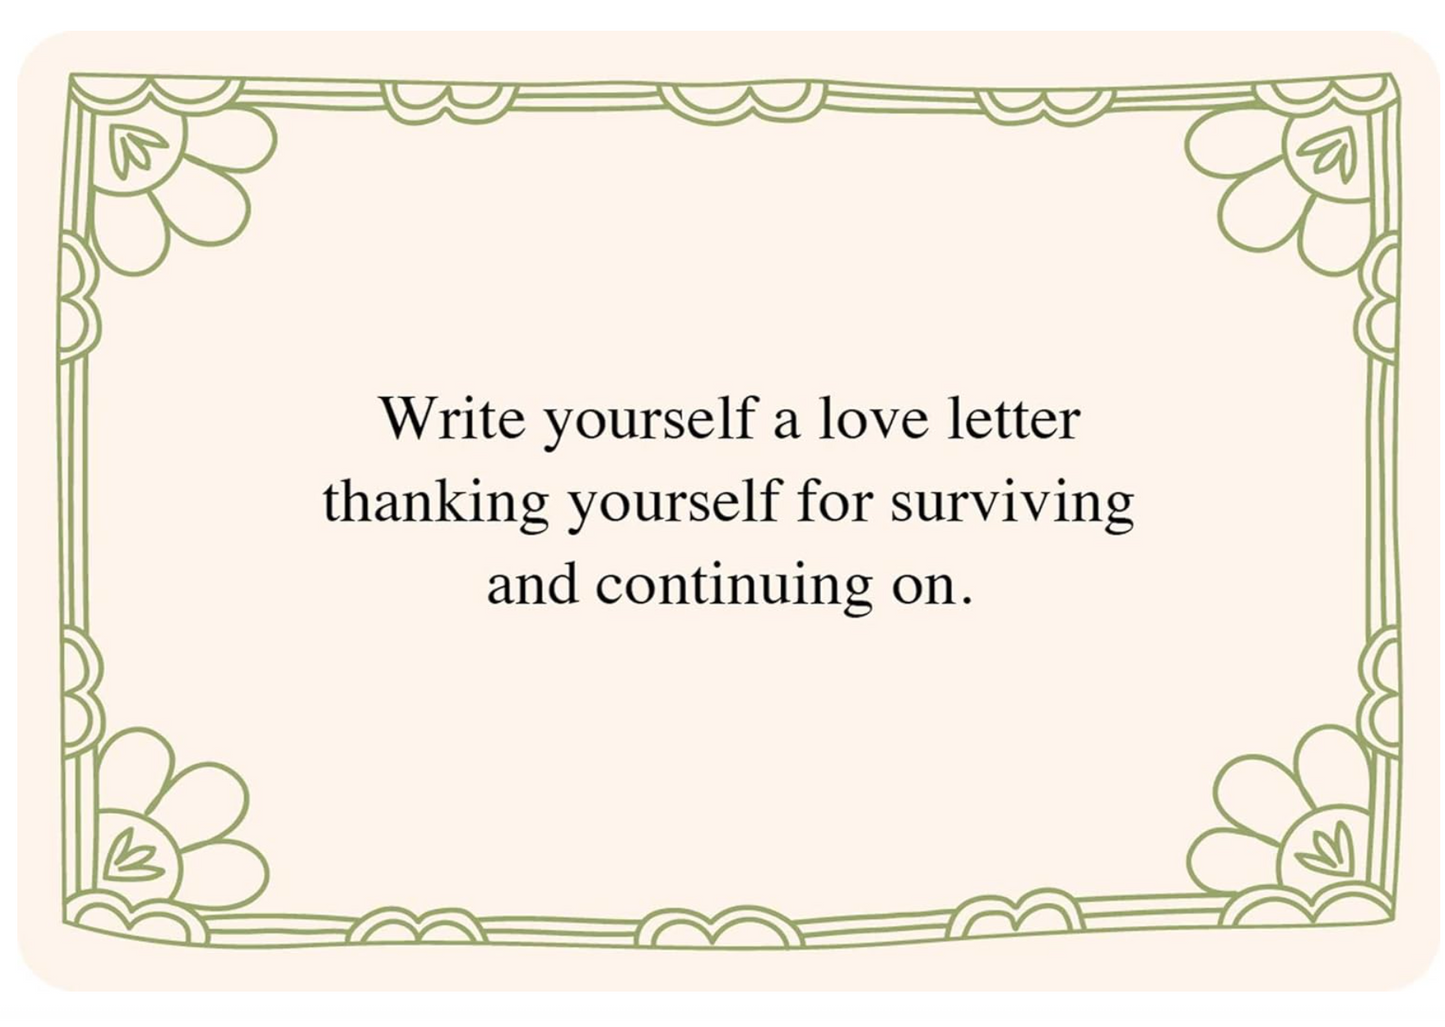 Rupi Kaur's Gratitude Writing Prompts